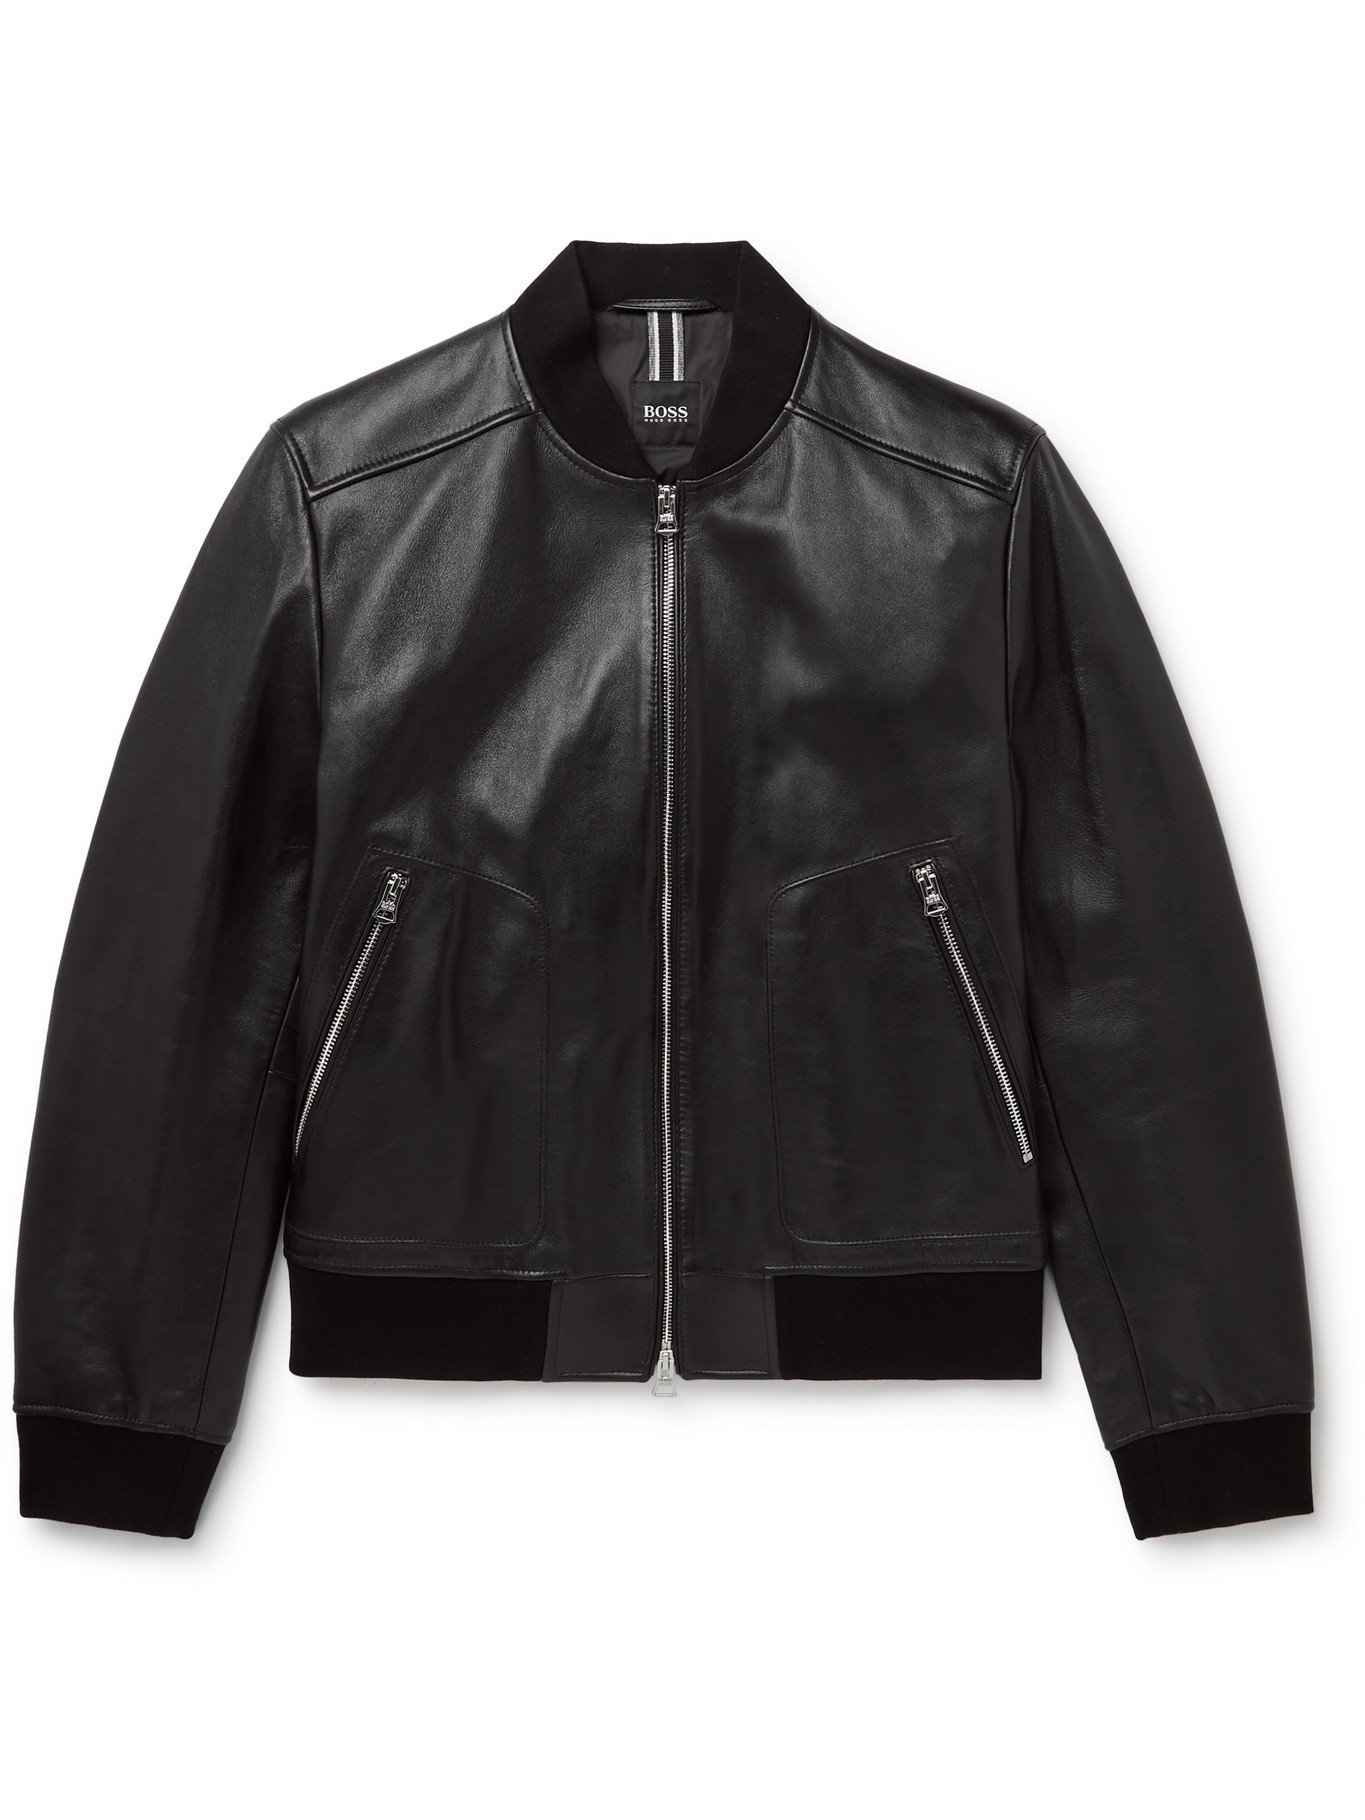 HUGO BOSS - Leather Jacket - Black - IT 44 Hugo Boss